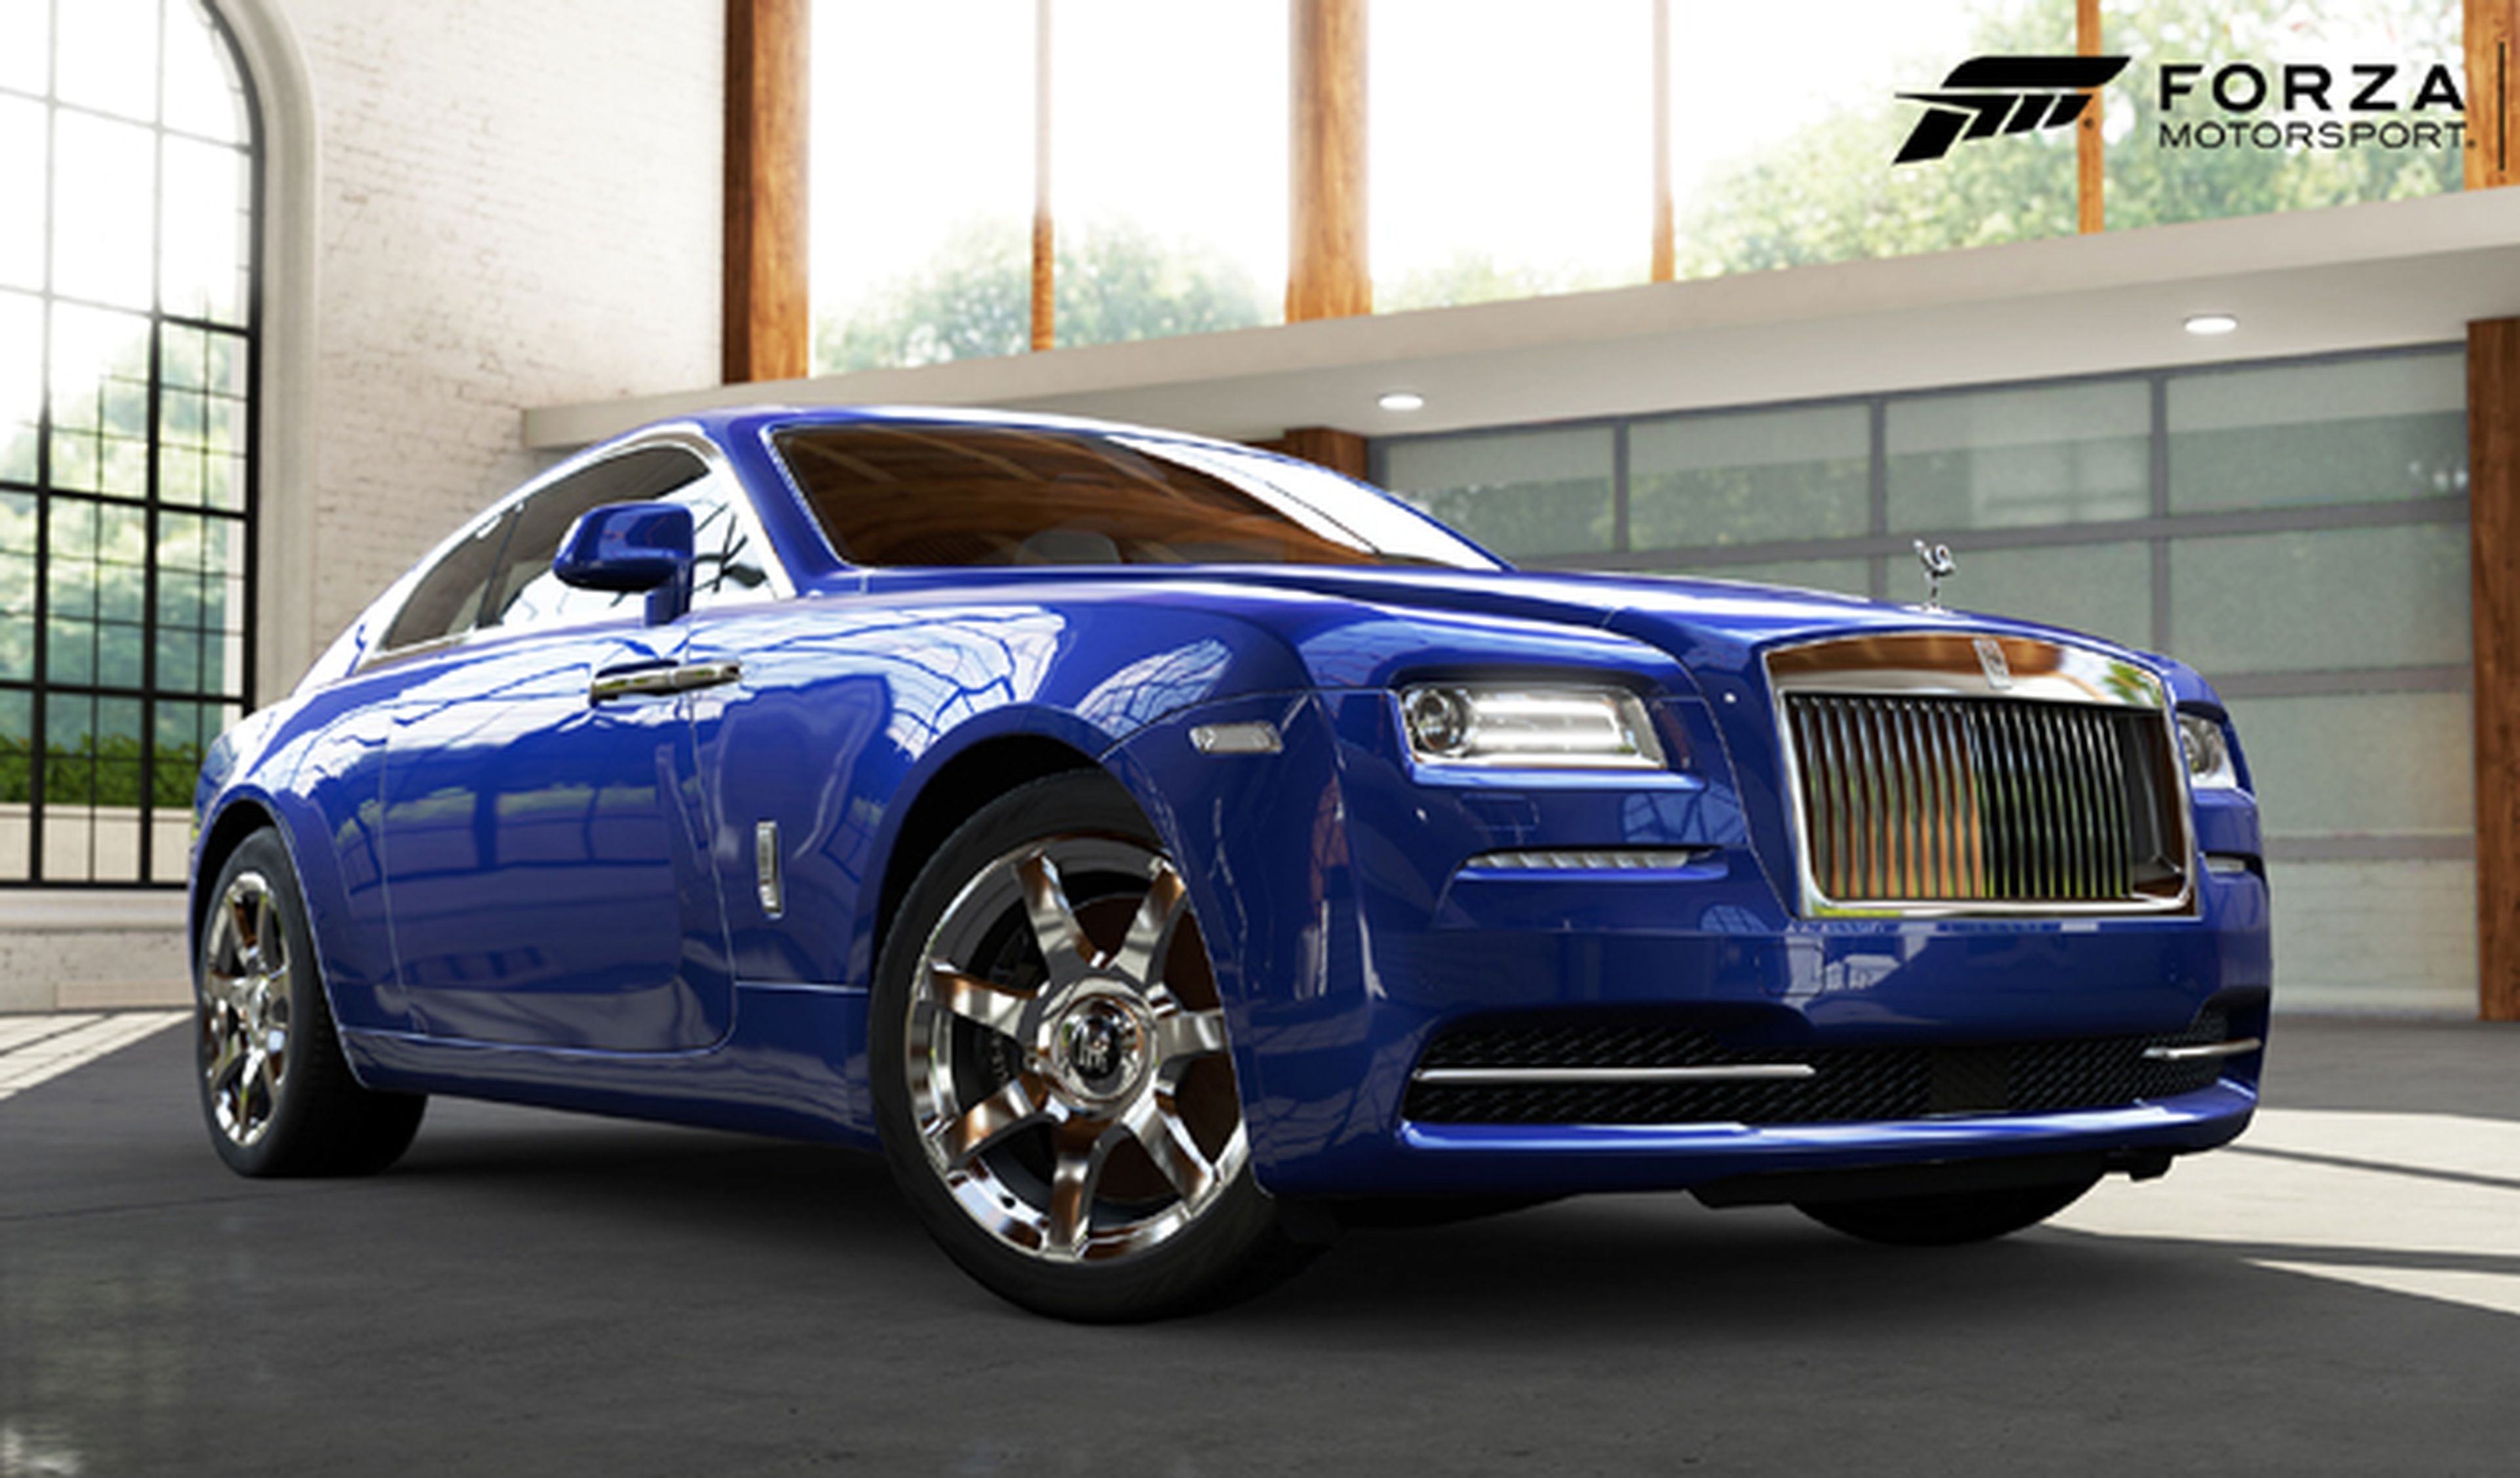 Rolls-Royce debuta en el Forza Motorsport 5